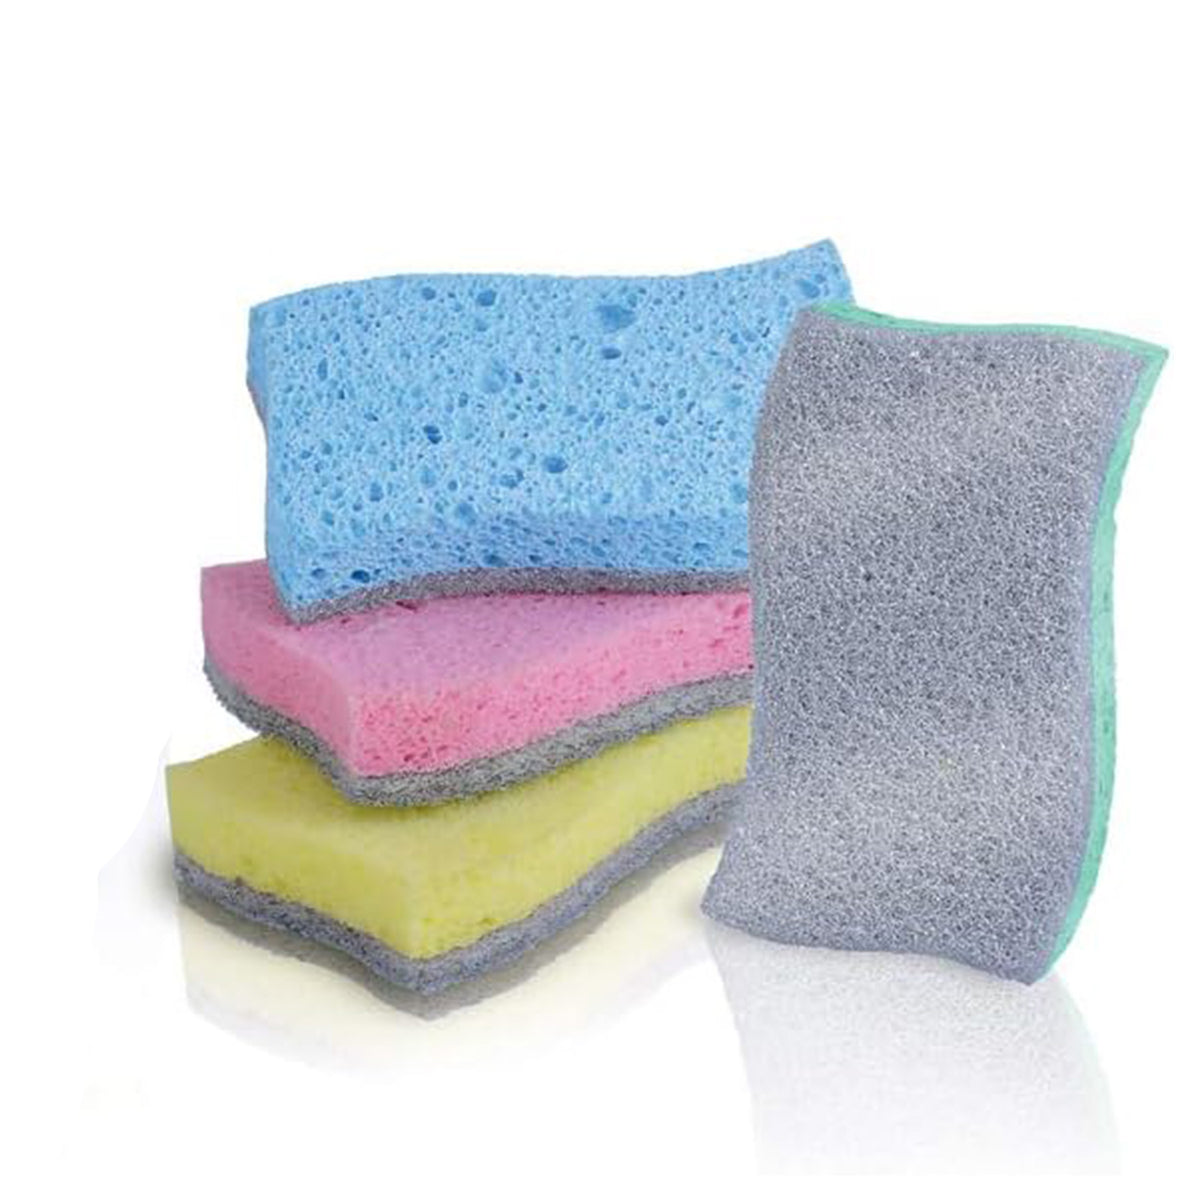 Cellulose Anti-Scratch Sponge - 2 PcsAn effective anti-scratch sponge scourer that contains 2 pcs.